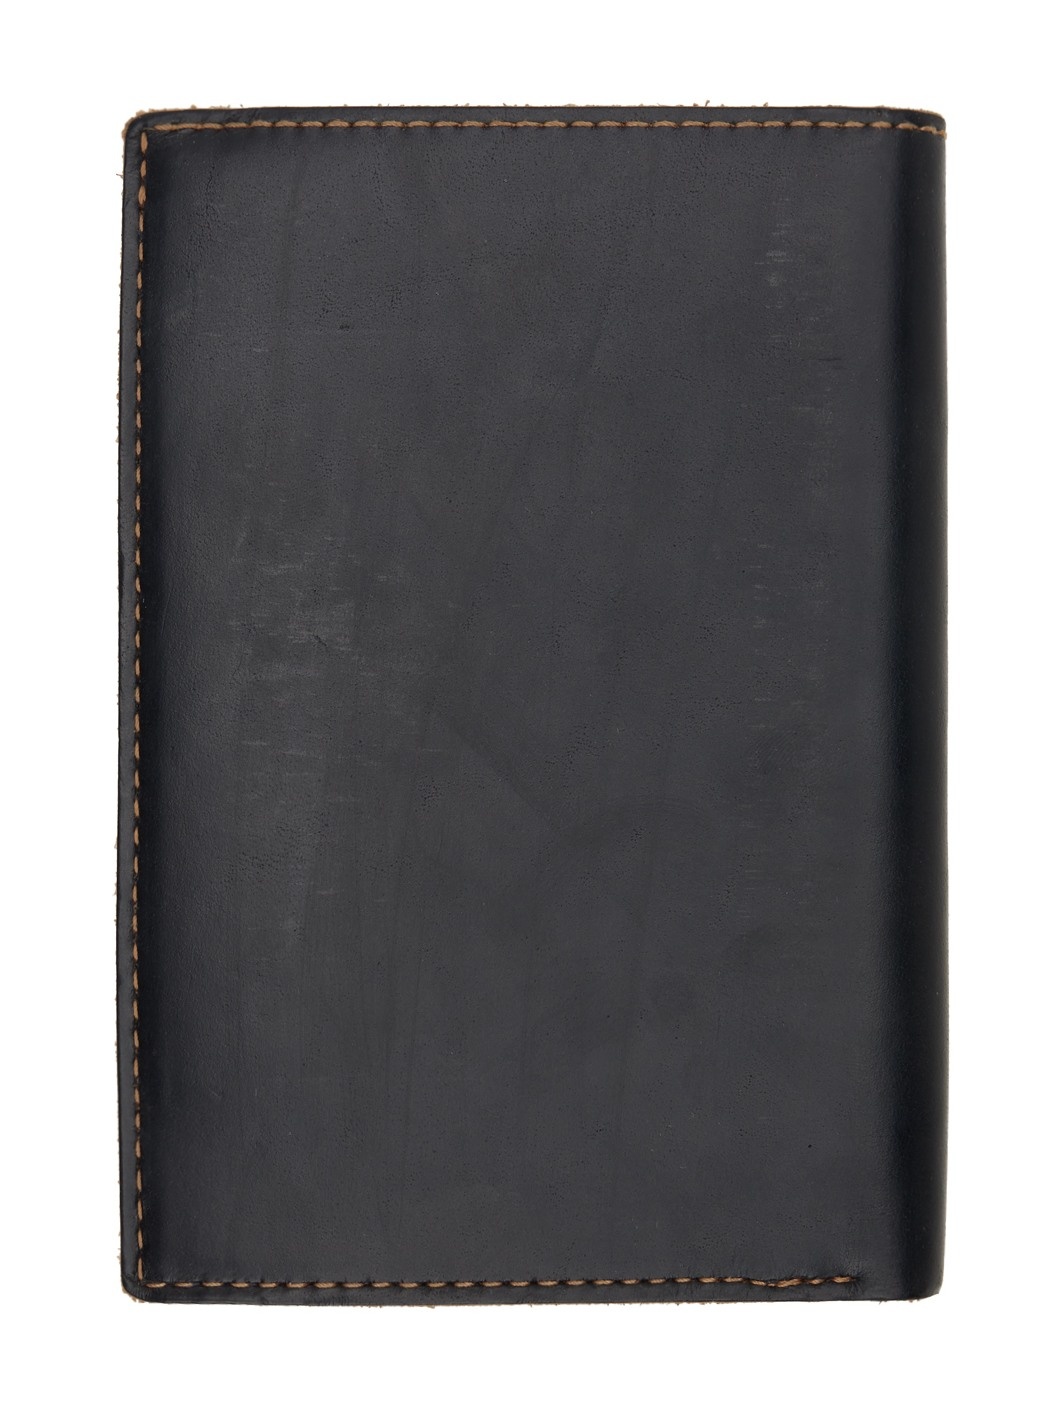 Black Leather Passport Holder - 2